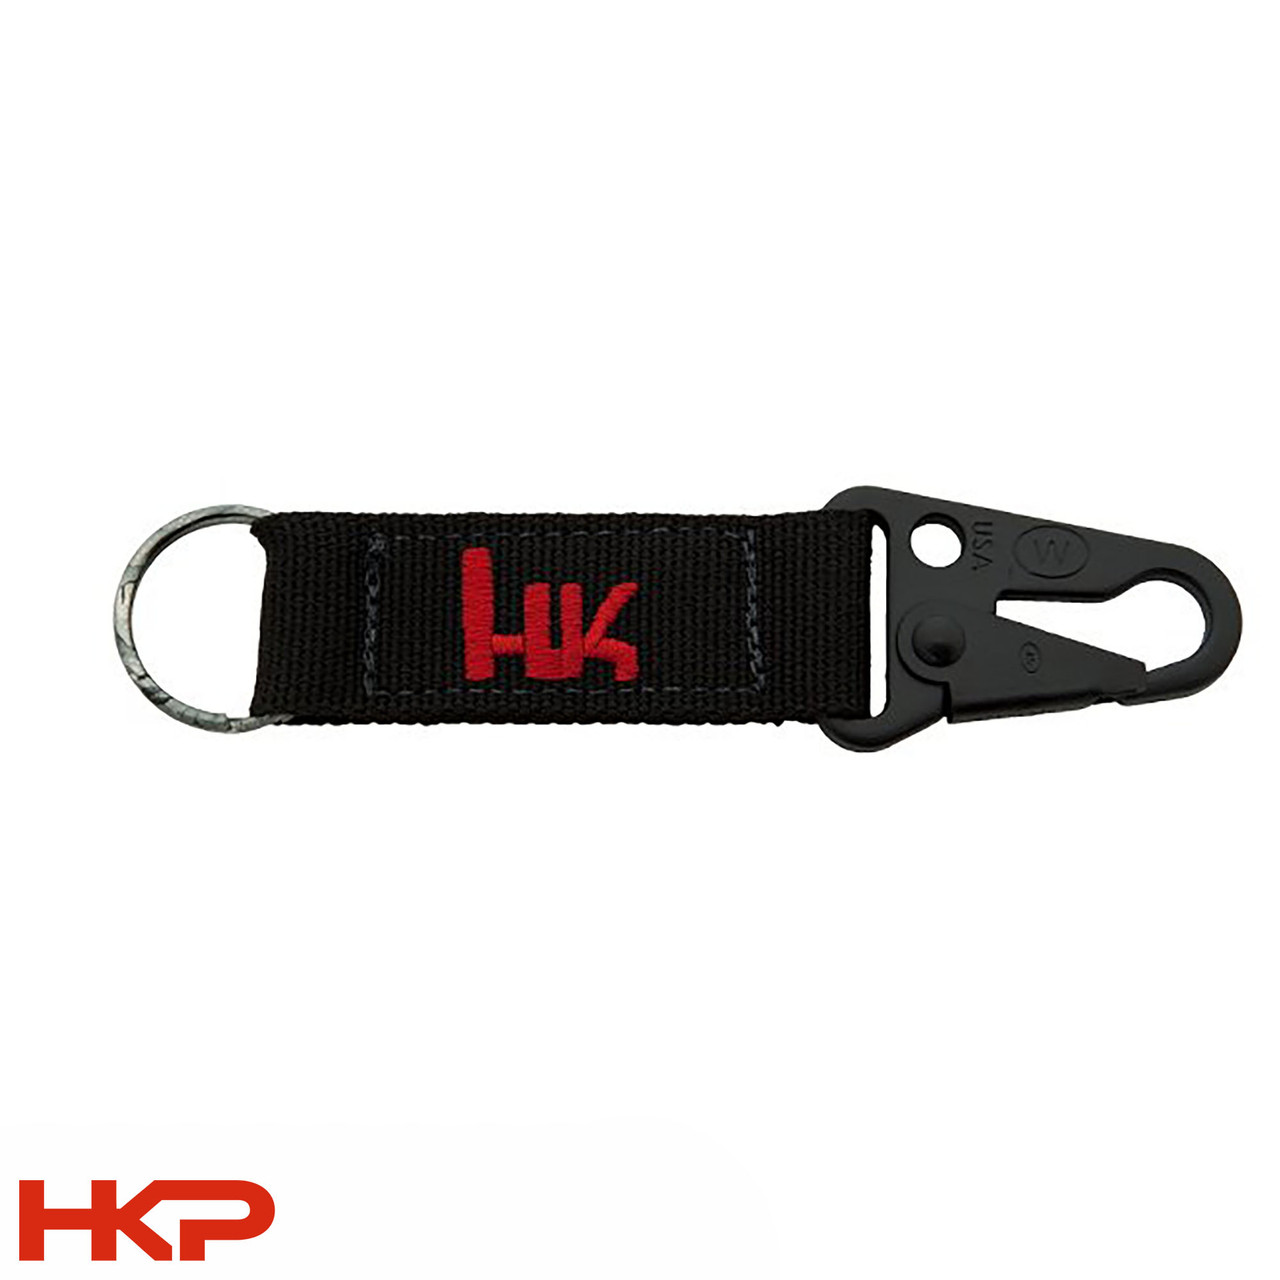 HK Snap Hook Key Chain